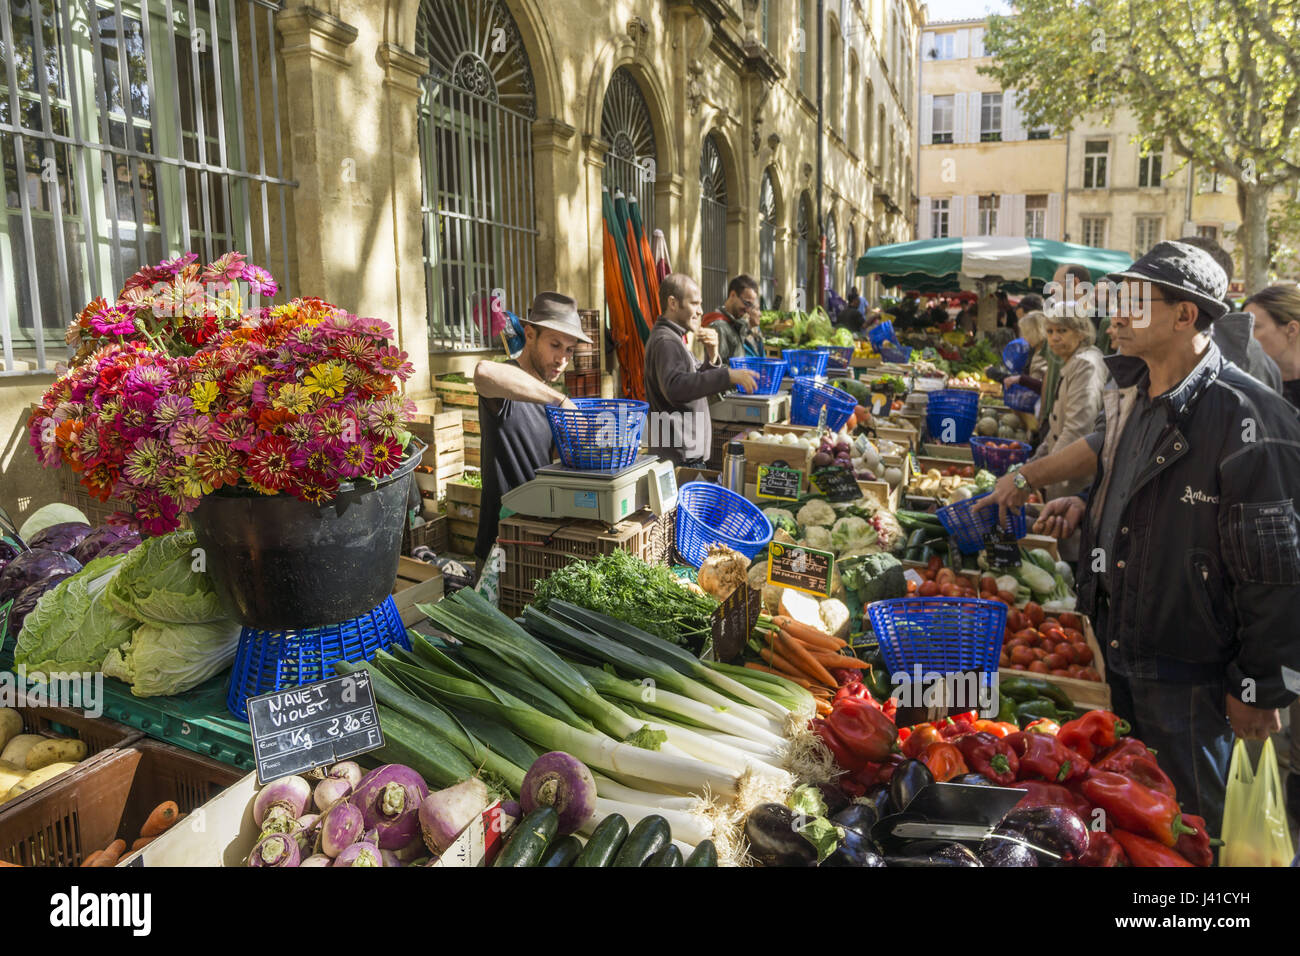 Gemüse Stand am Marktplatz Richelme, Aix-En-Provence, Bouche du Rhône, Cote d ' Azur, Frankreich Stockfoto